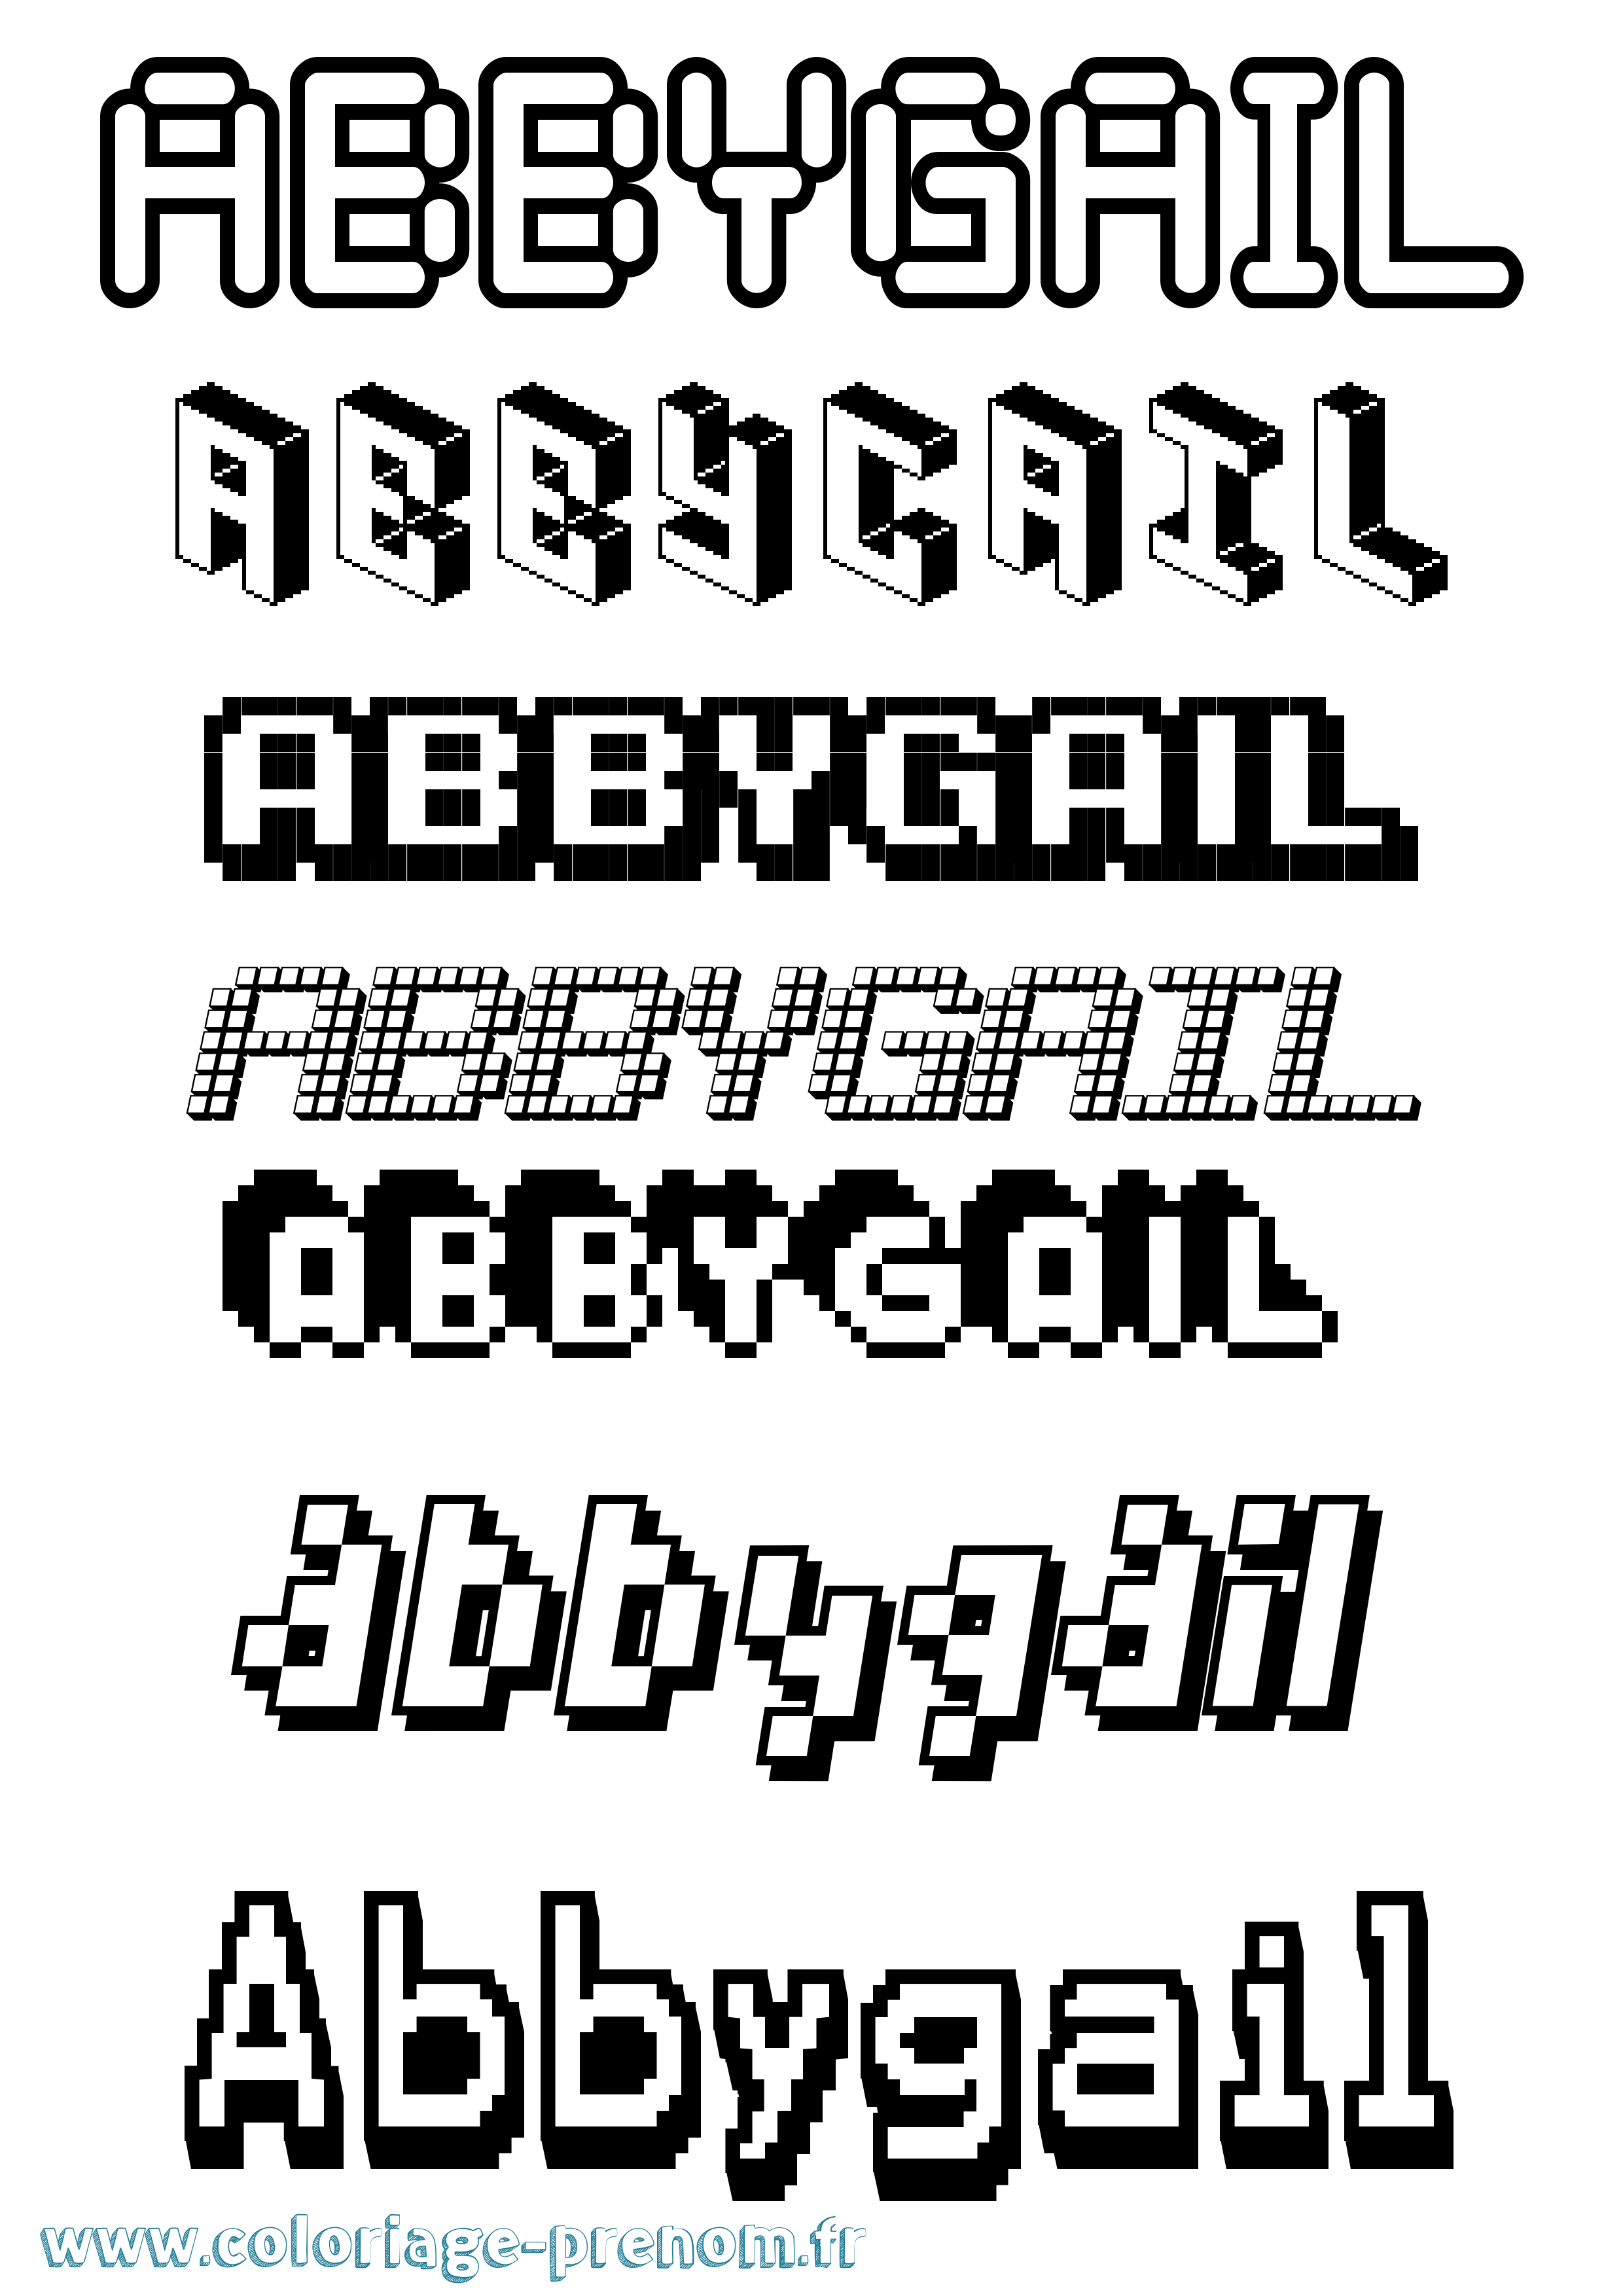 Coloriage prénom Abbygail Pixel